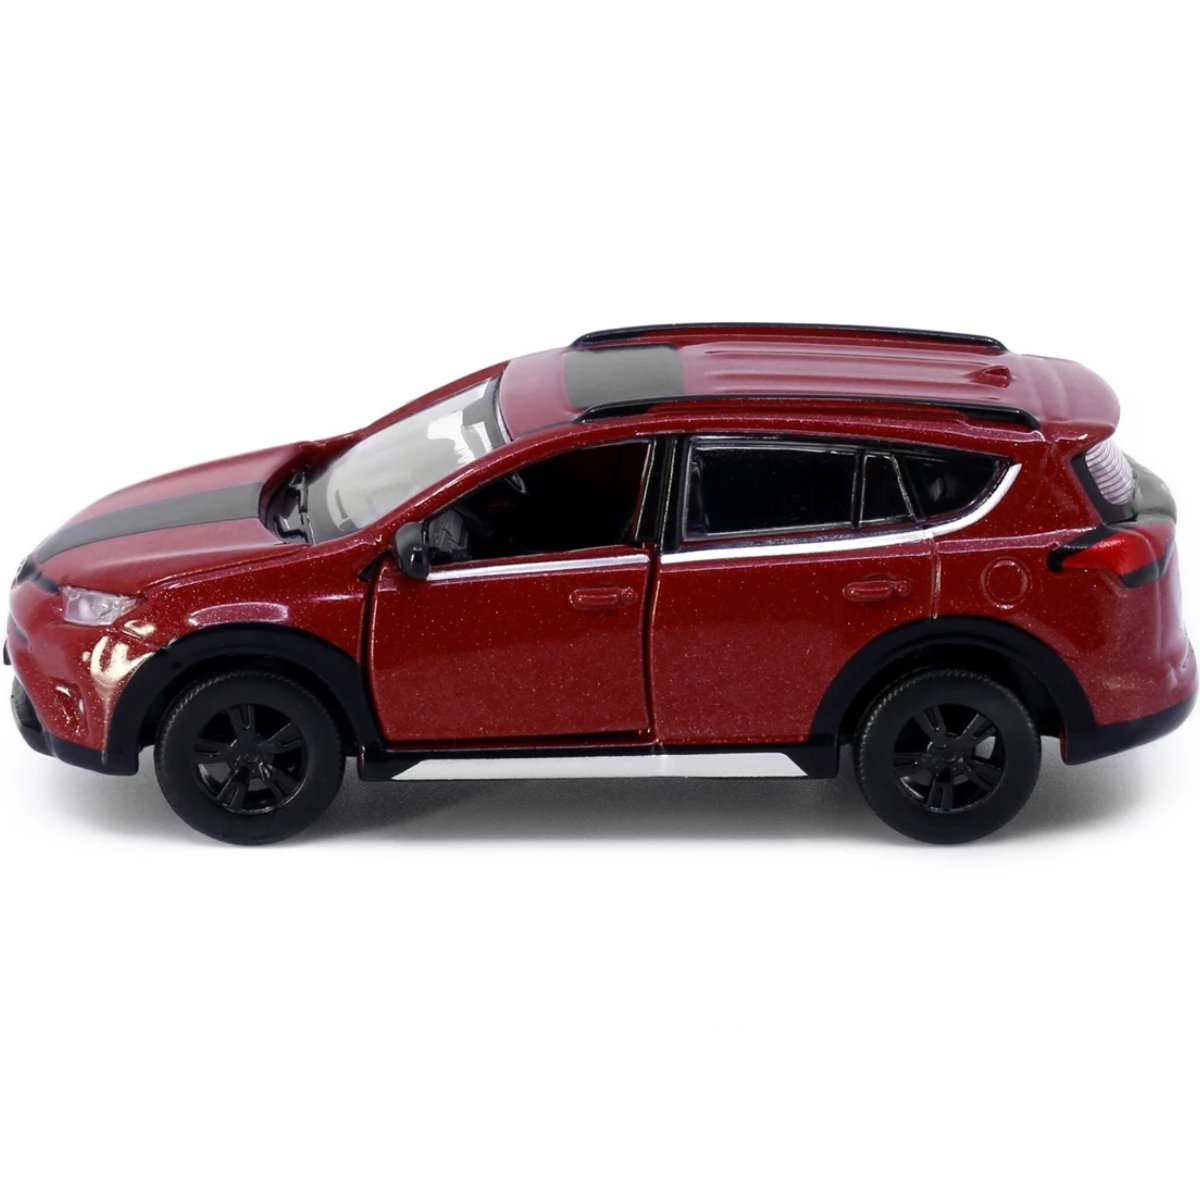 Tiny Models Toyota RAV4 Red (1:64 Scale) - Phillips Hobbies